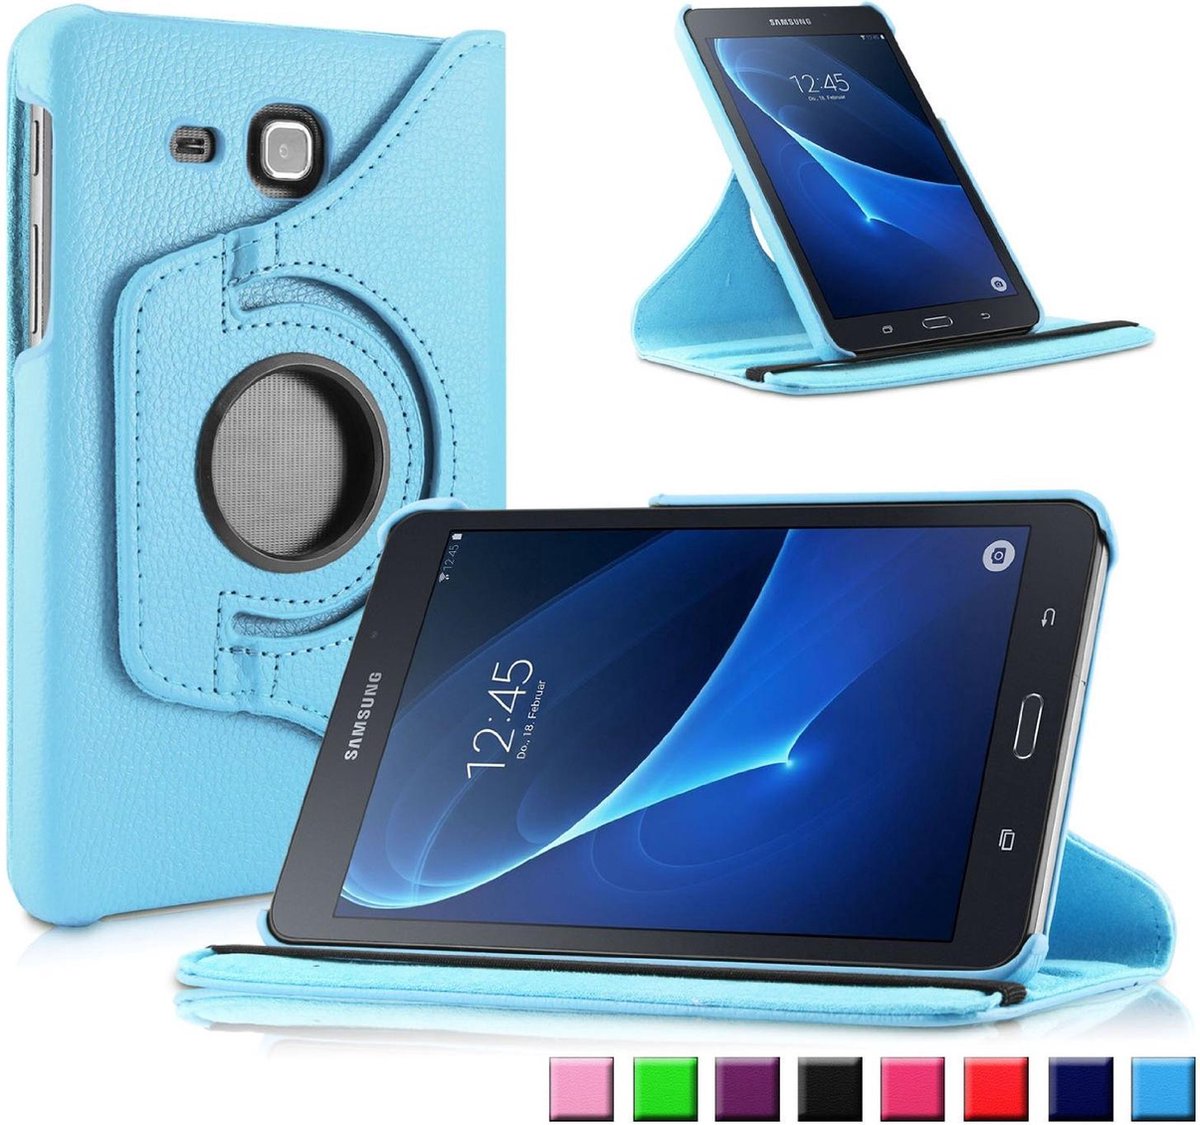 Xssive Tablet Hoes Case Cover 360° draaibaar voor Samsung Galaxy Tab A 7 inch T280 T285 Licht Blauw